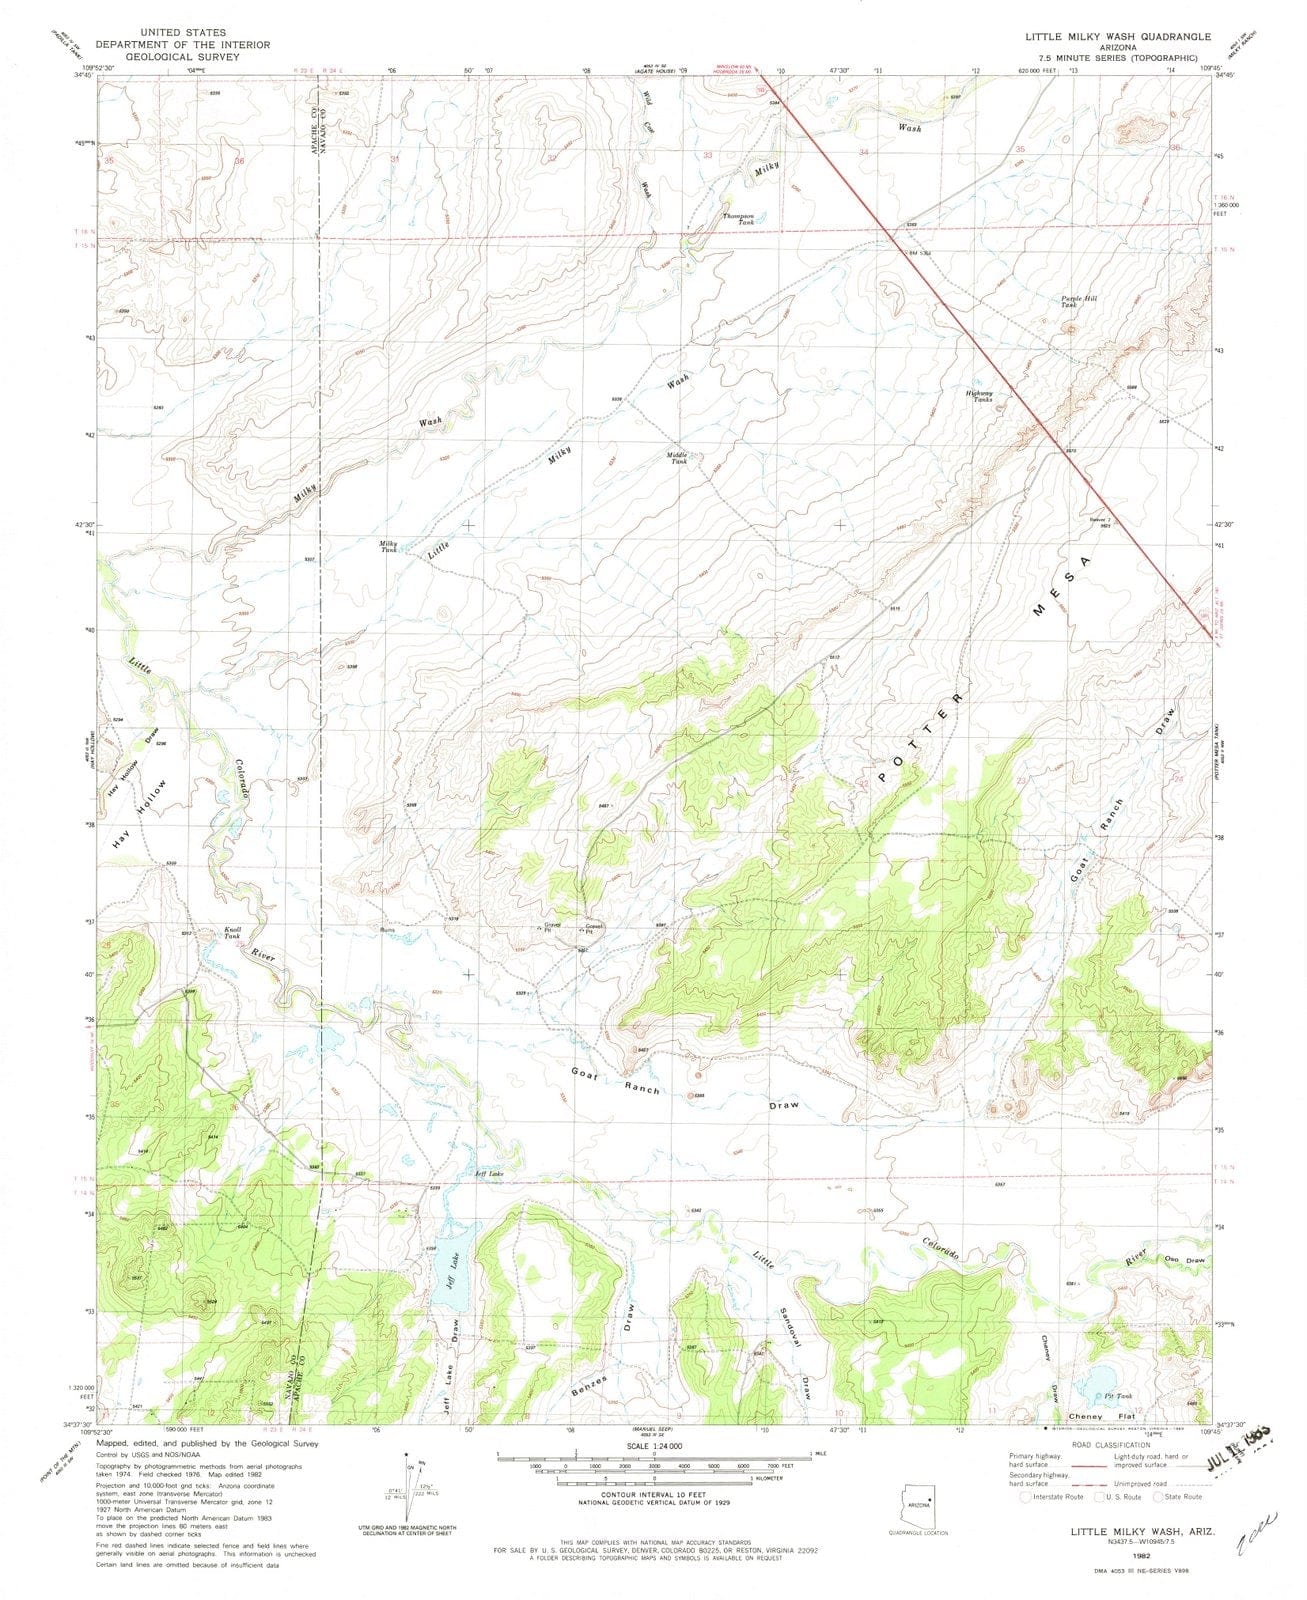 1982 Little Milky Wash, AZ - Arizona - USGS Topographic Map